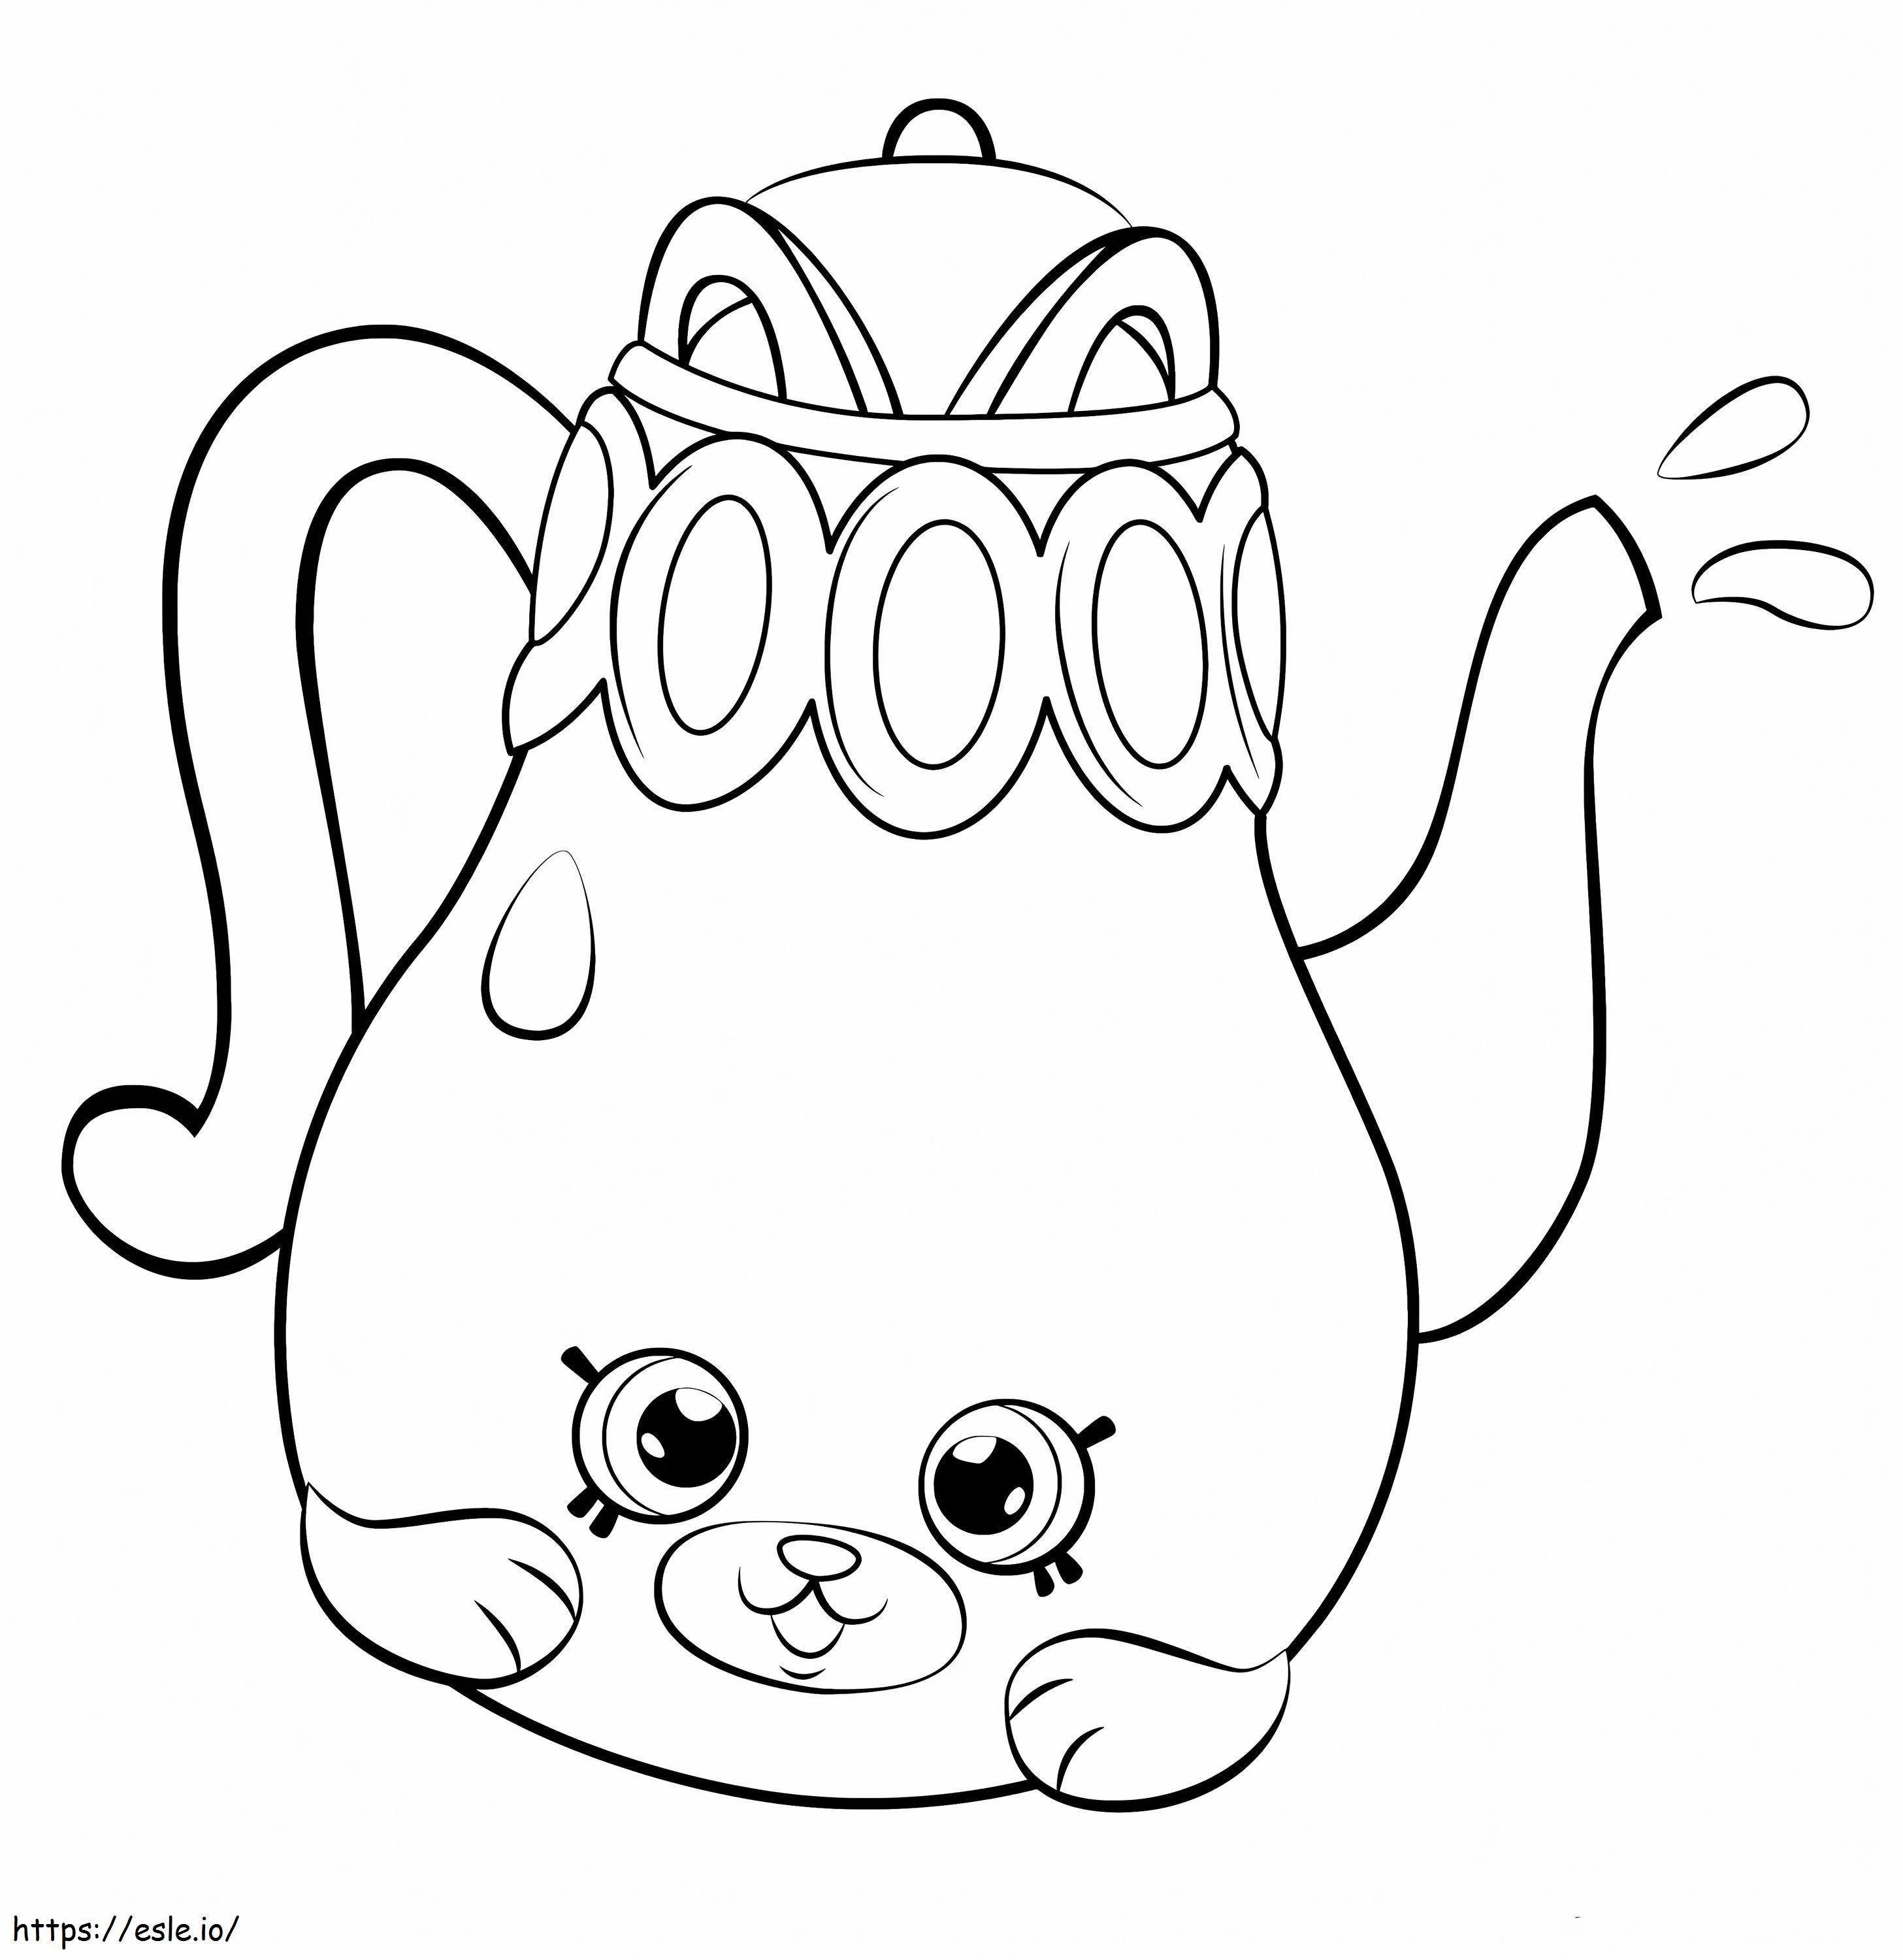 1545180799 Edge Tea Kettle Teapot coloring page